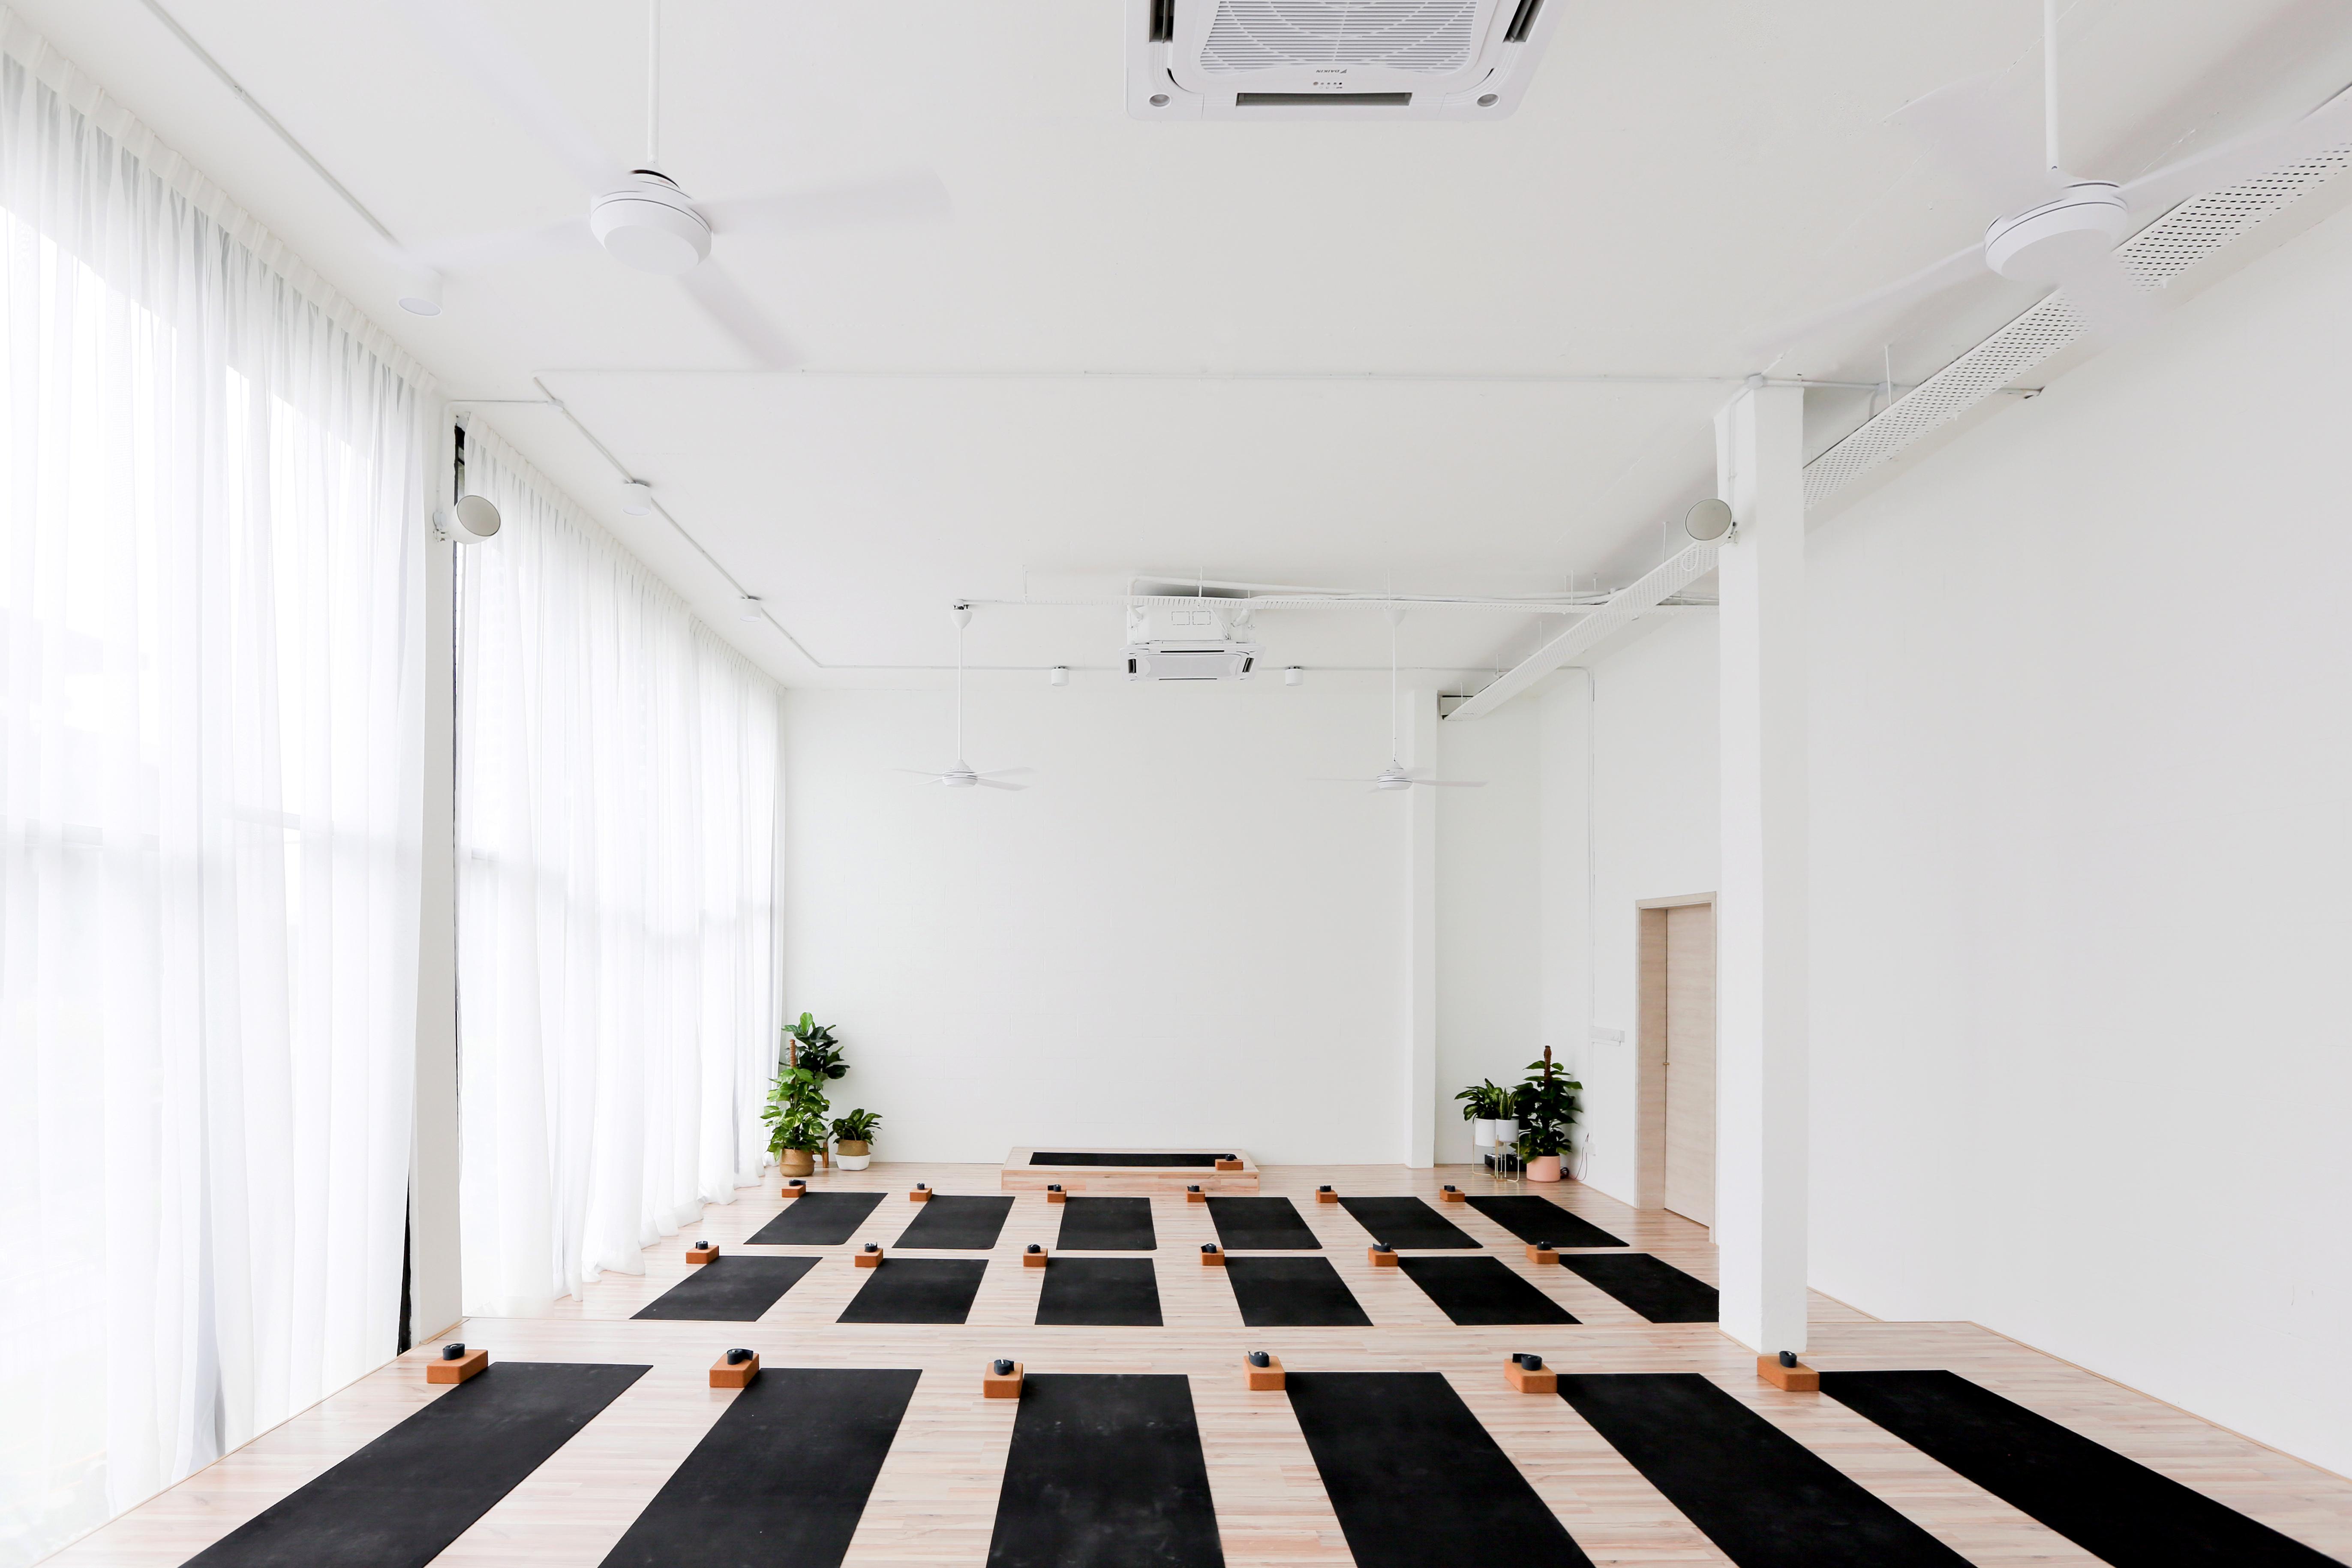 Yoga Studio, Kuala Lumpur, Malaysia - Other Projects